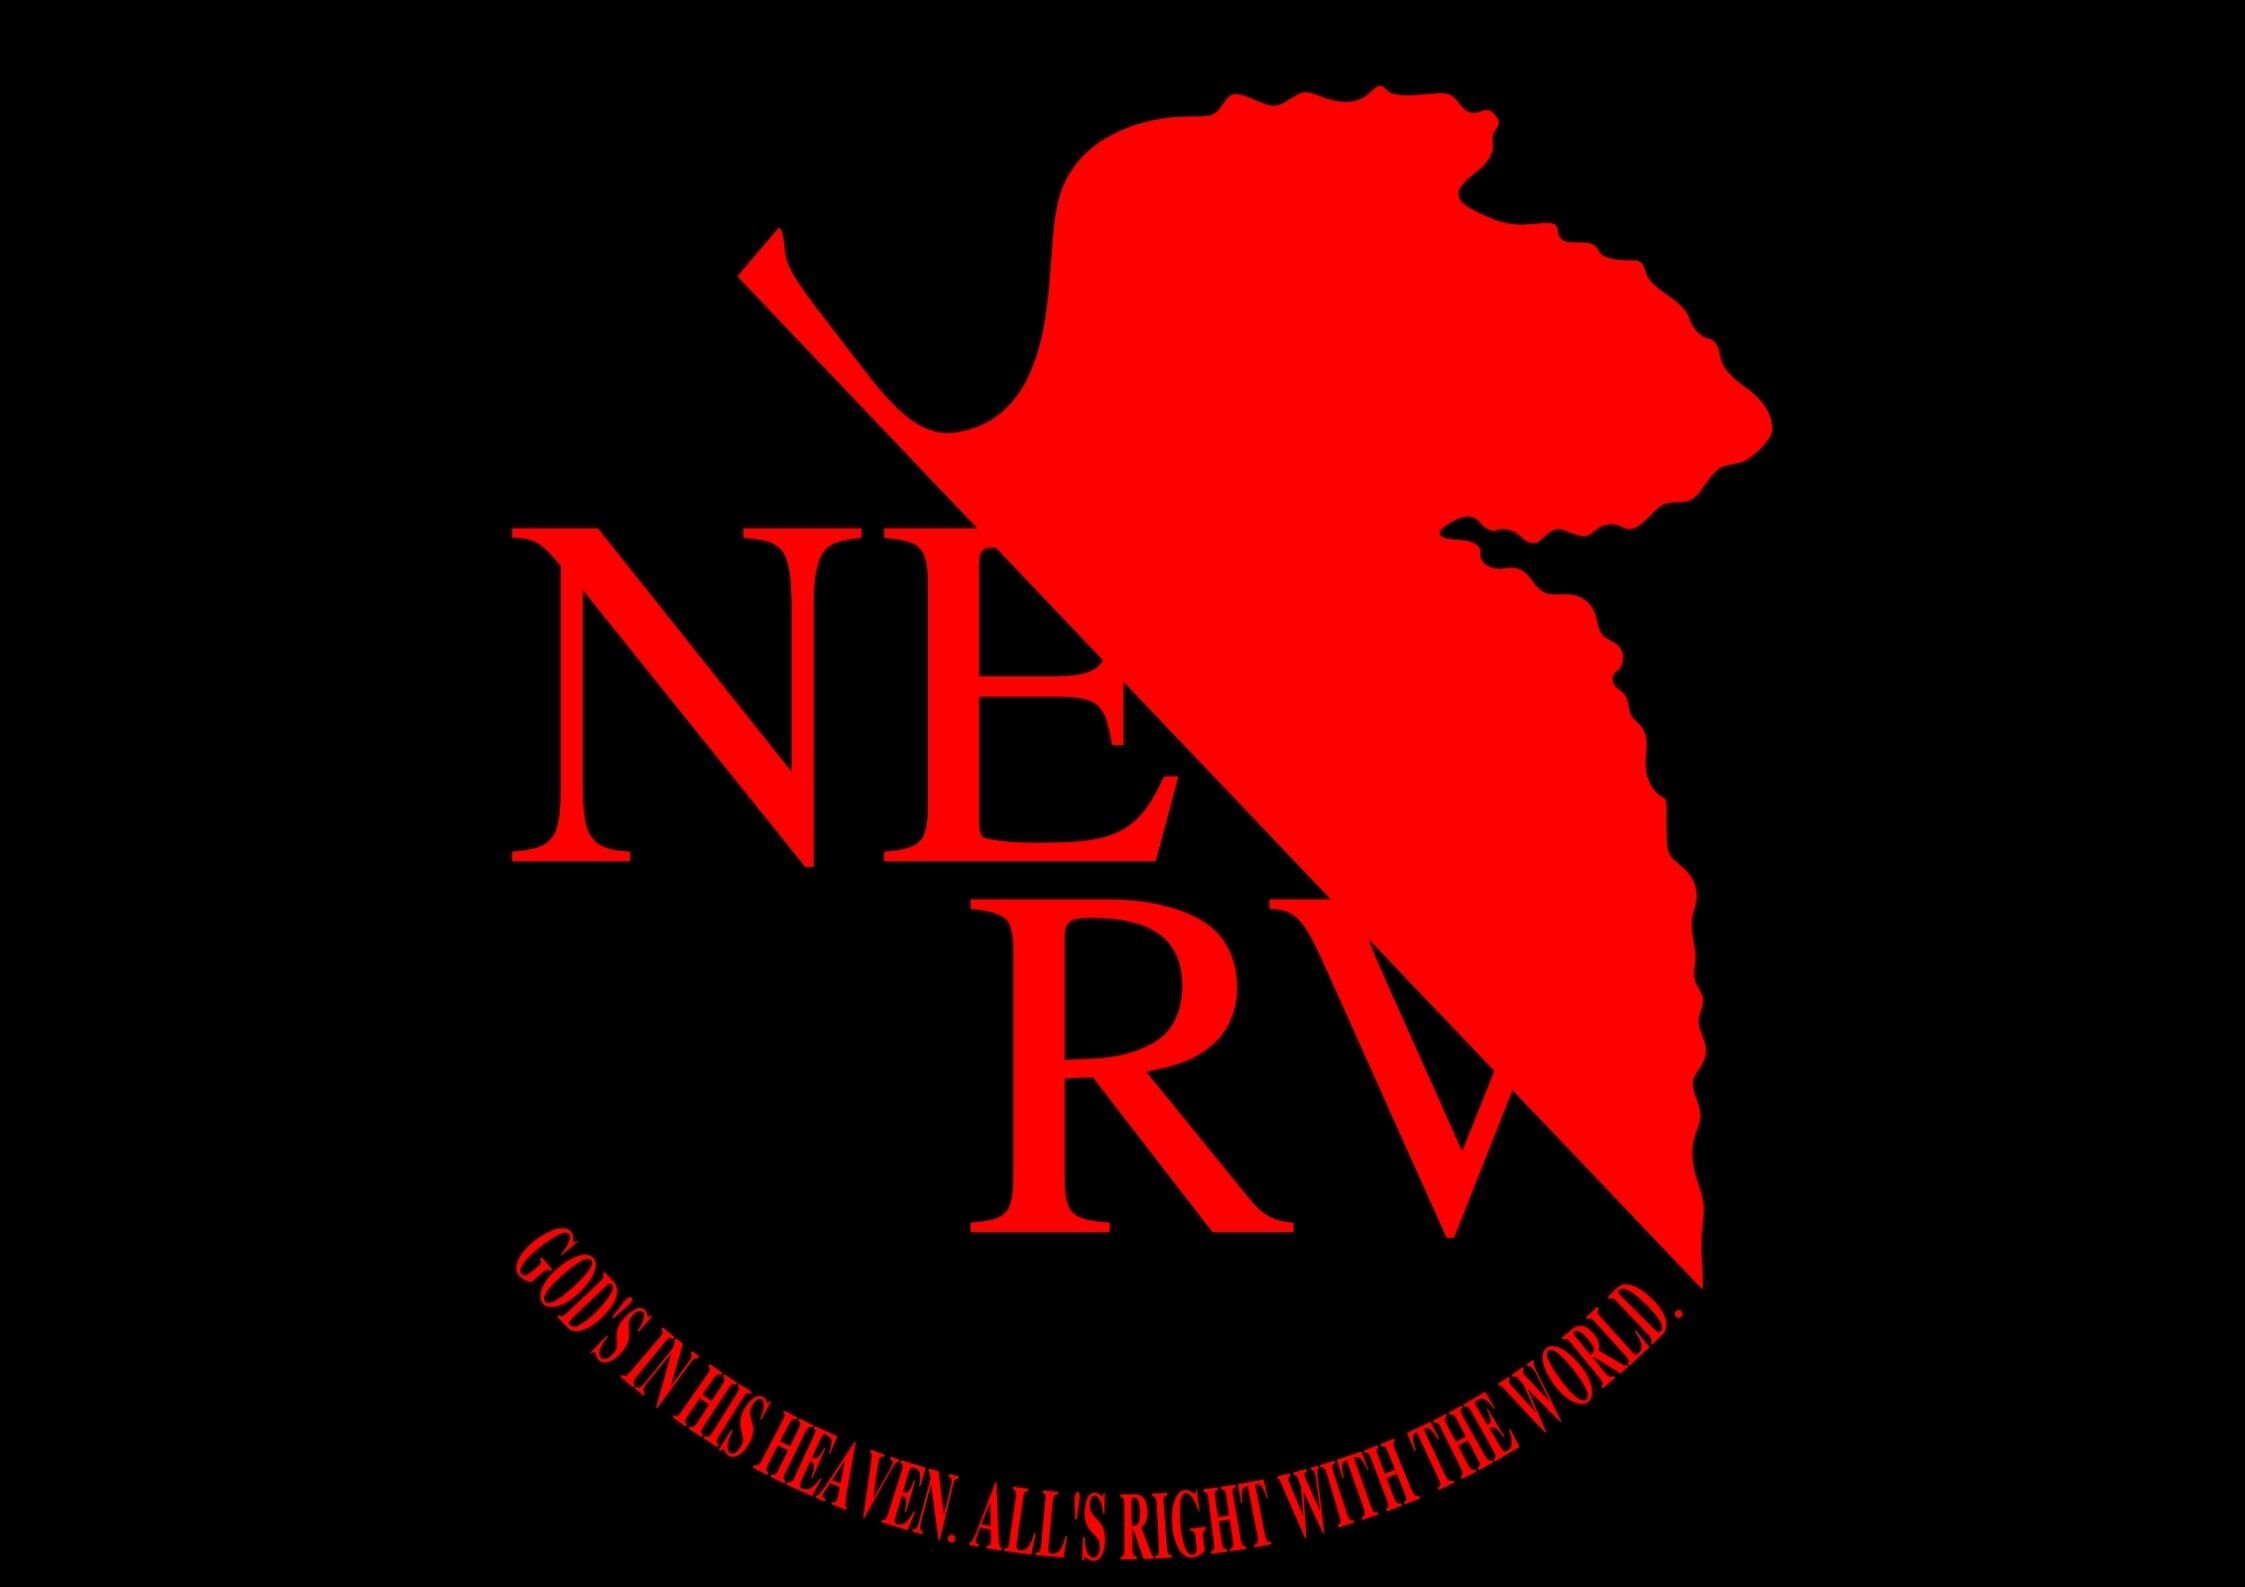 Eva bang. Nerv Евангелион. Евангелион логотип Nerv. Нерв лого.